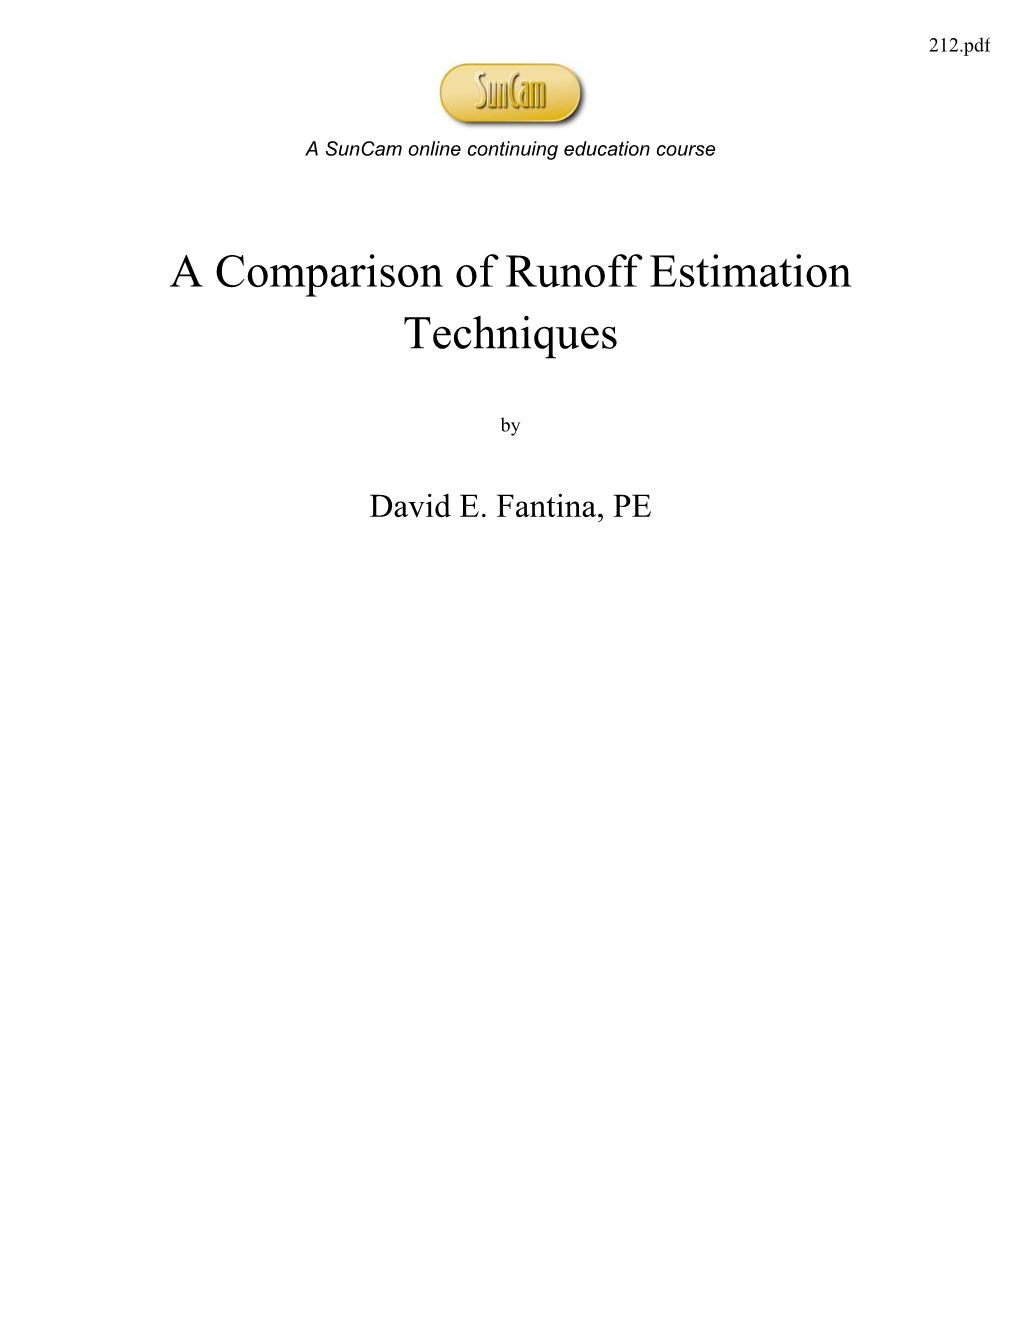 A Comparison of Runoff Estimation Techniques